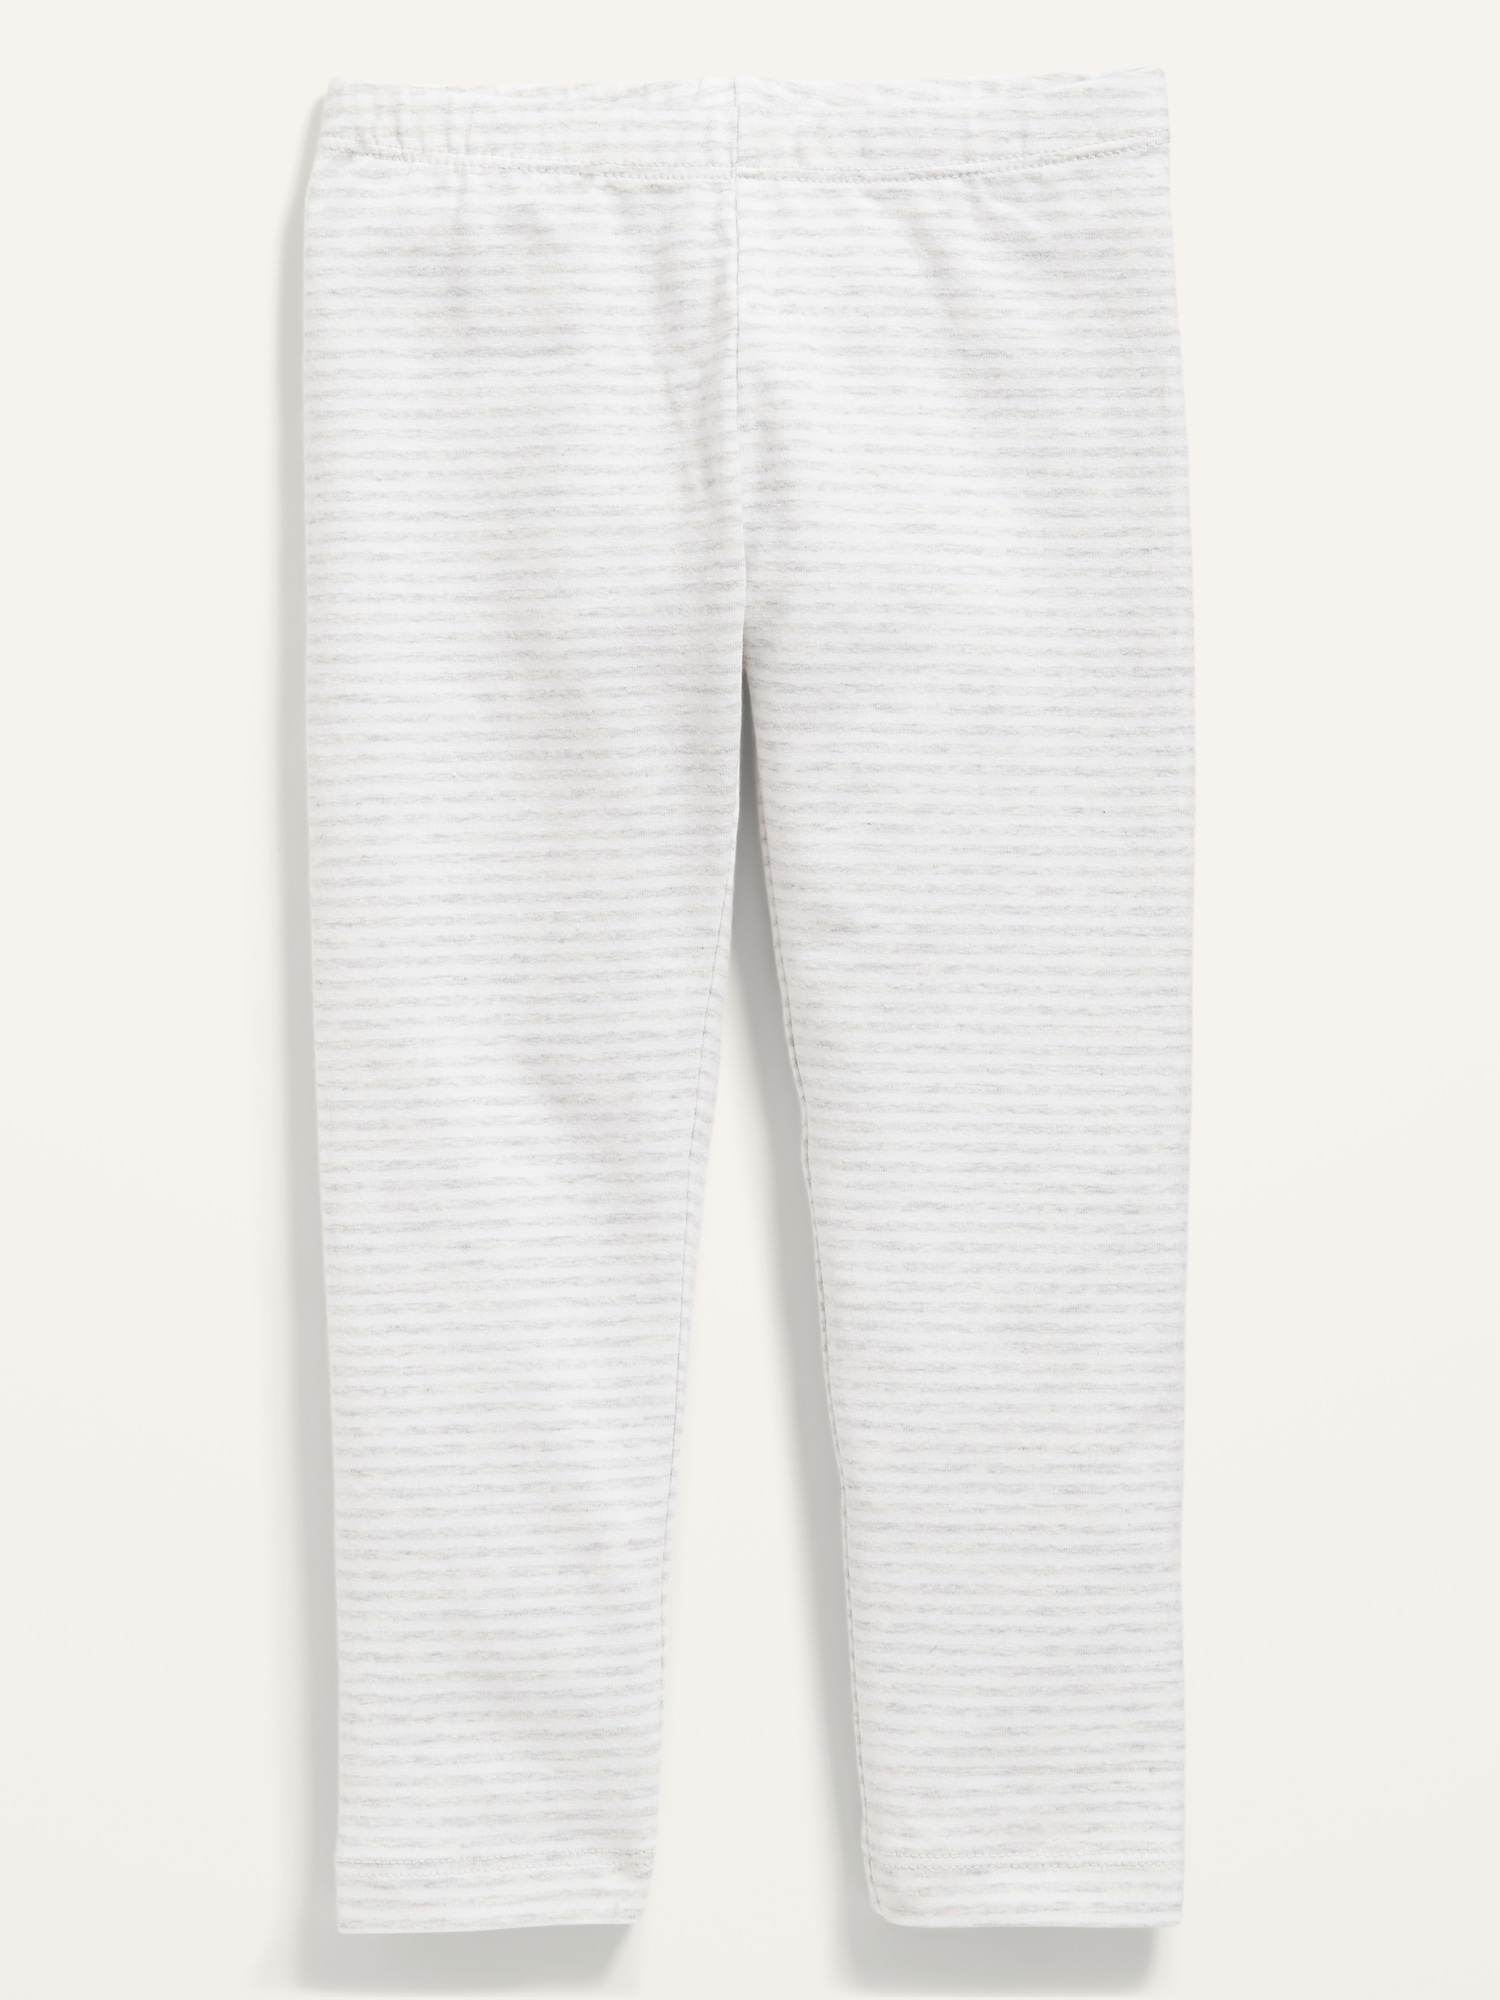 Buy Kids Baby Girl 2Pcs Black Striped Bowknot Top White Jeans Long Pants  Pants at Amazon.in